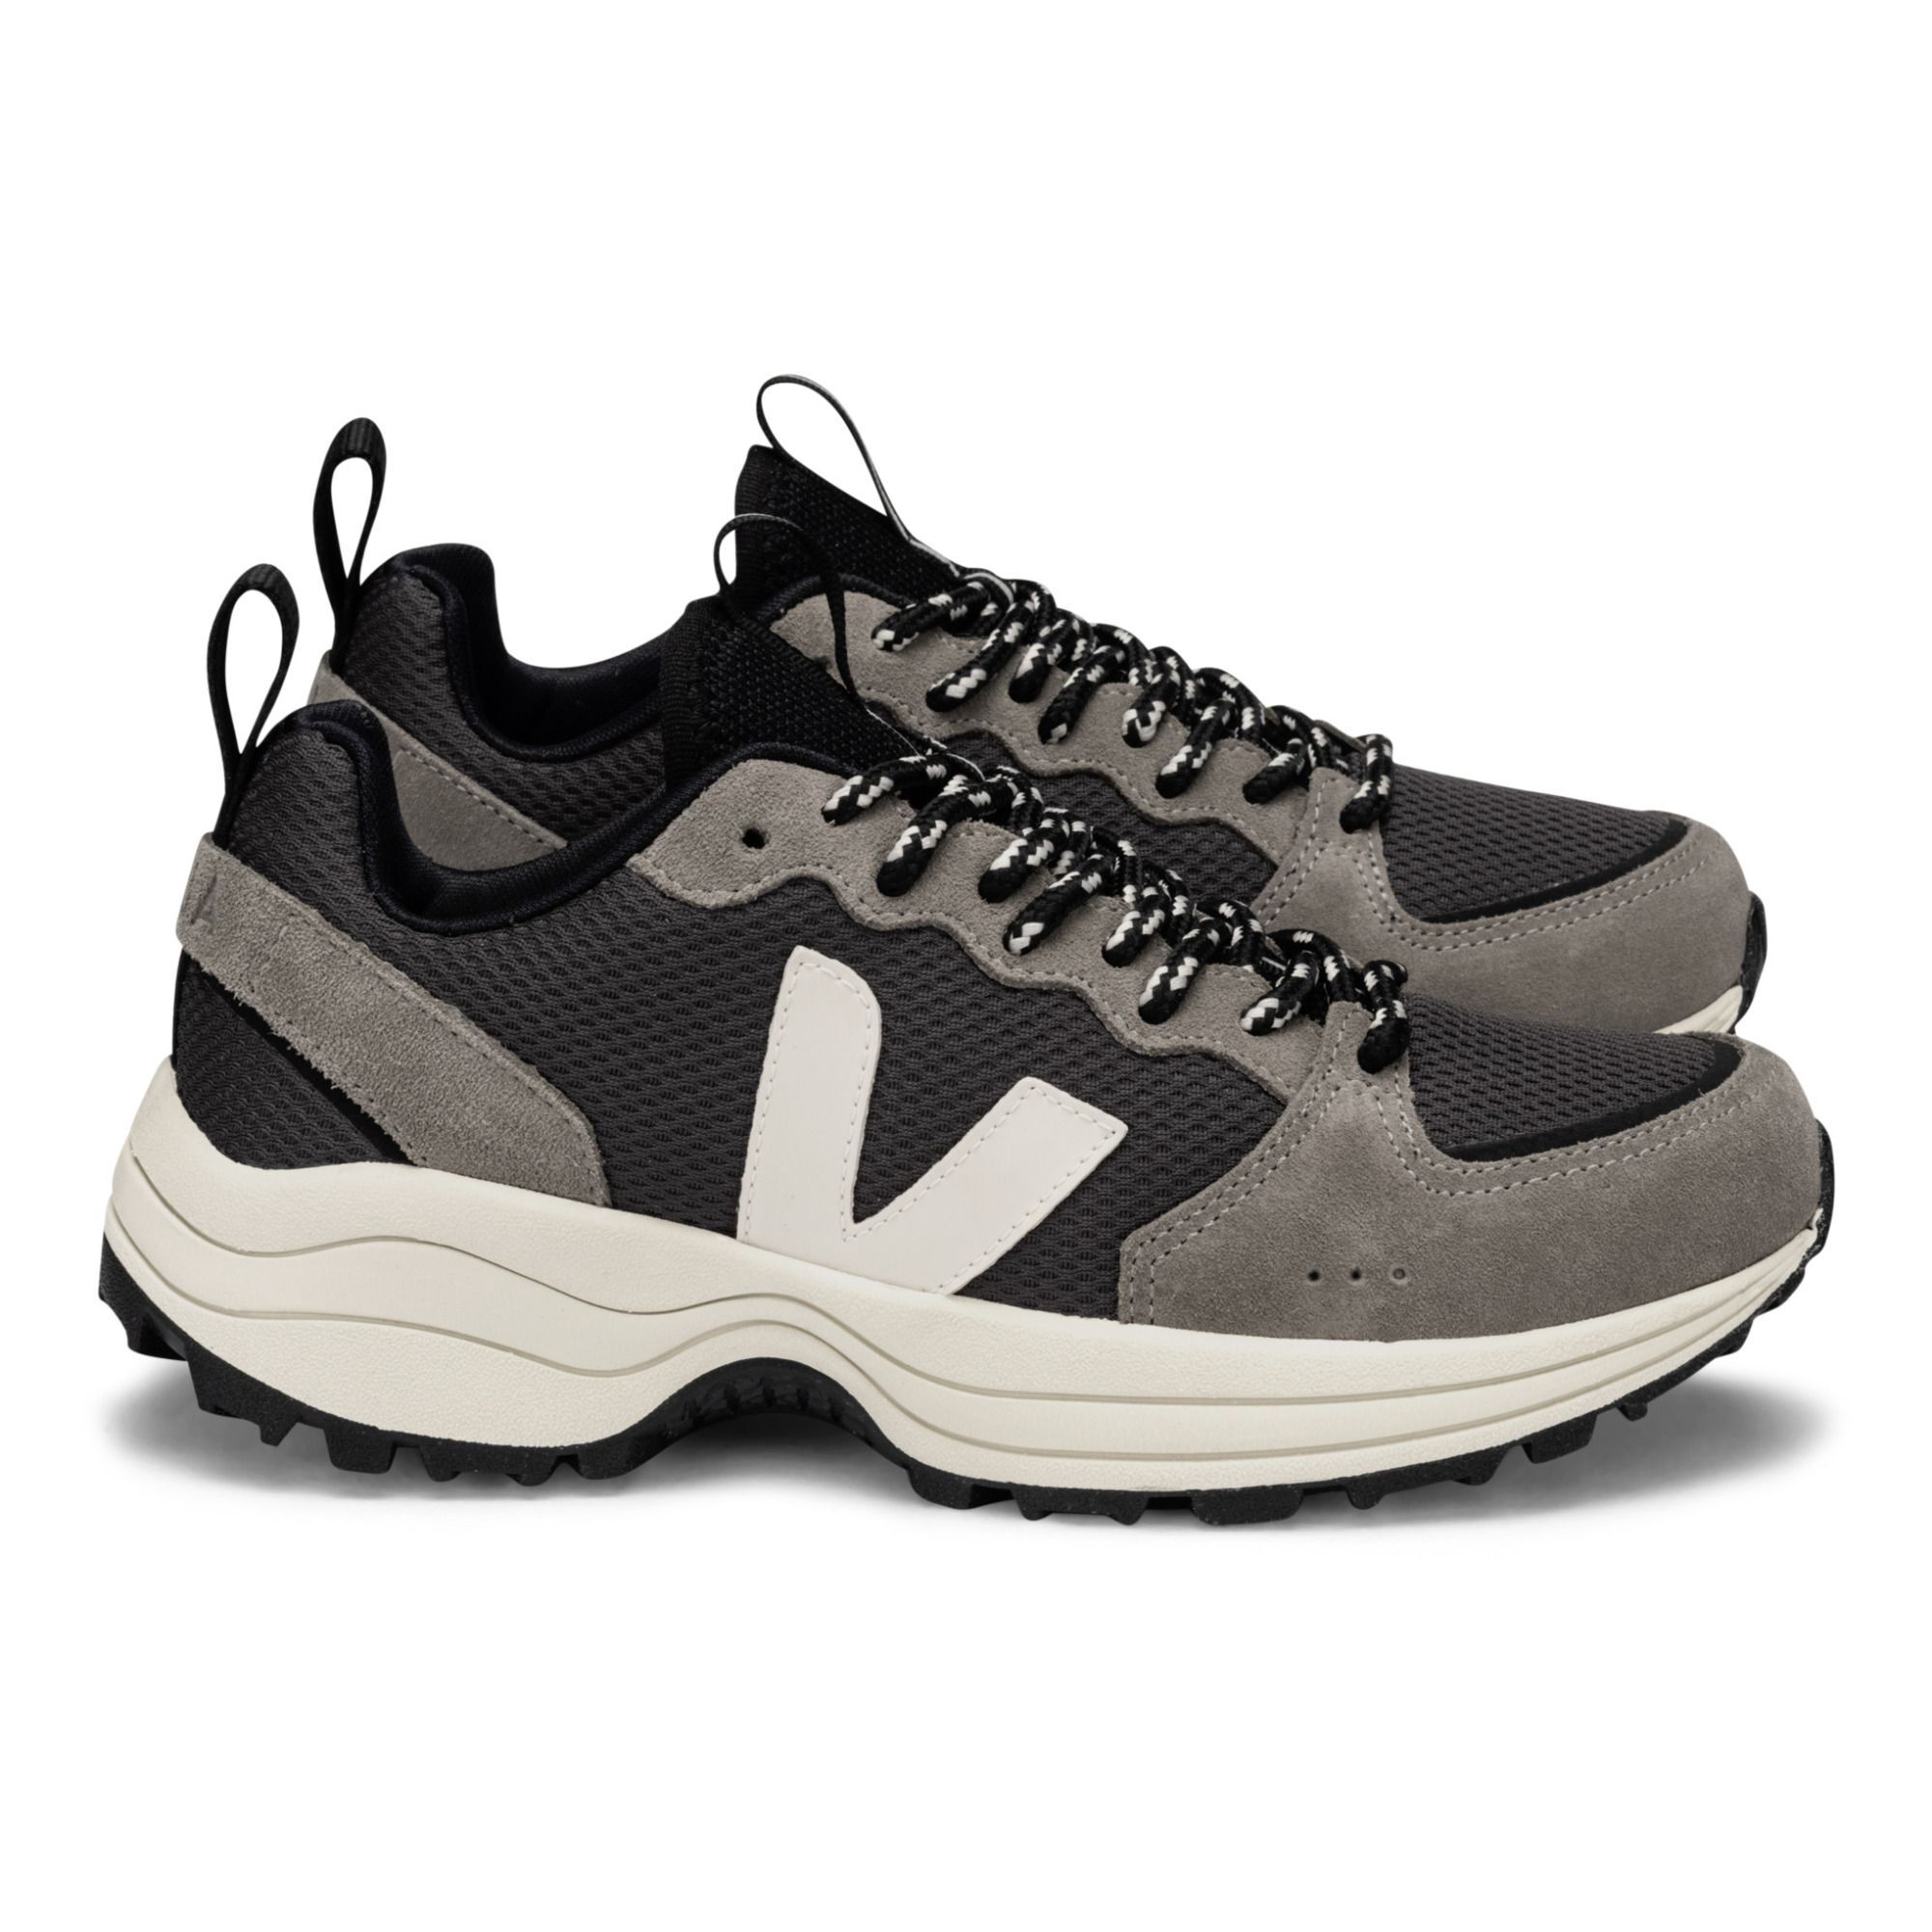 Veja Venturi Sneakers Charcoal grey 44EU Women